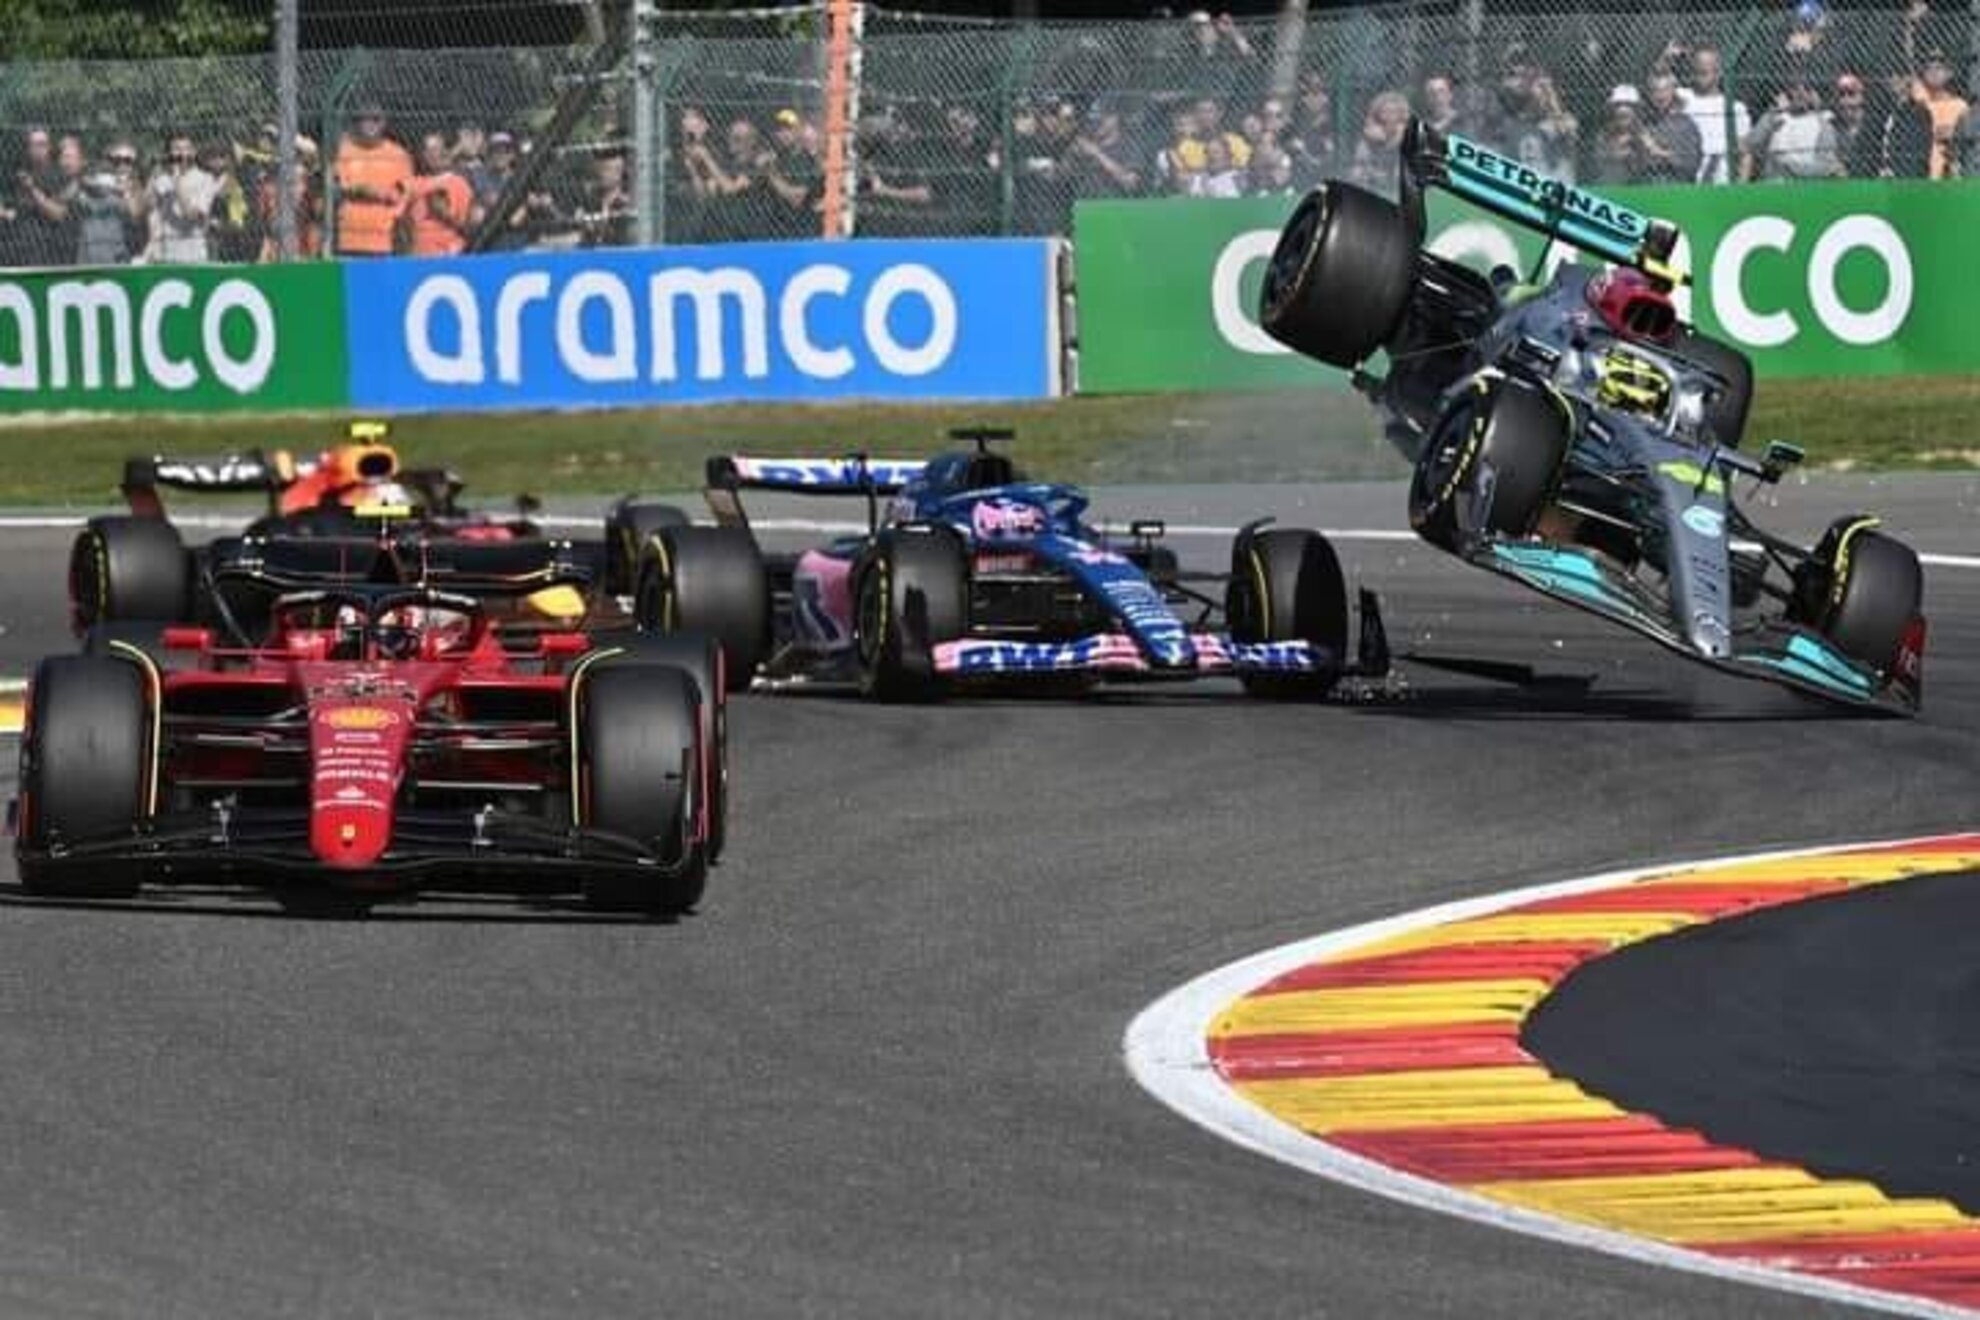 The crash between Lewis Hamilton and Fernando Alonso